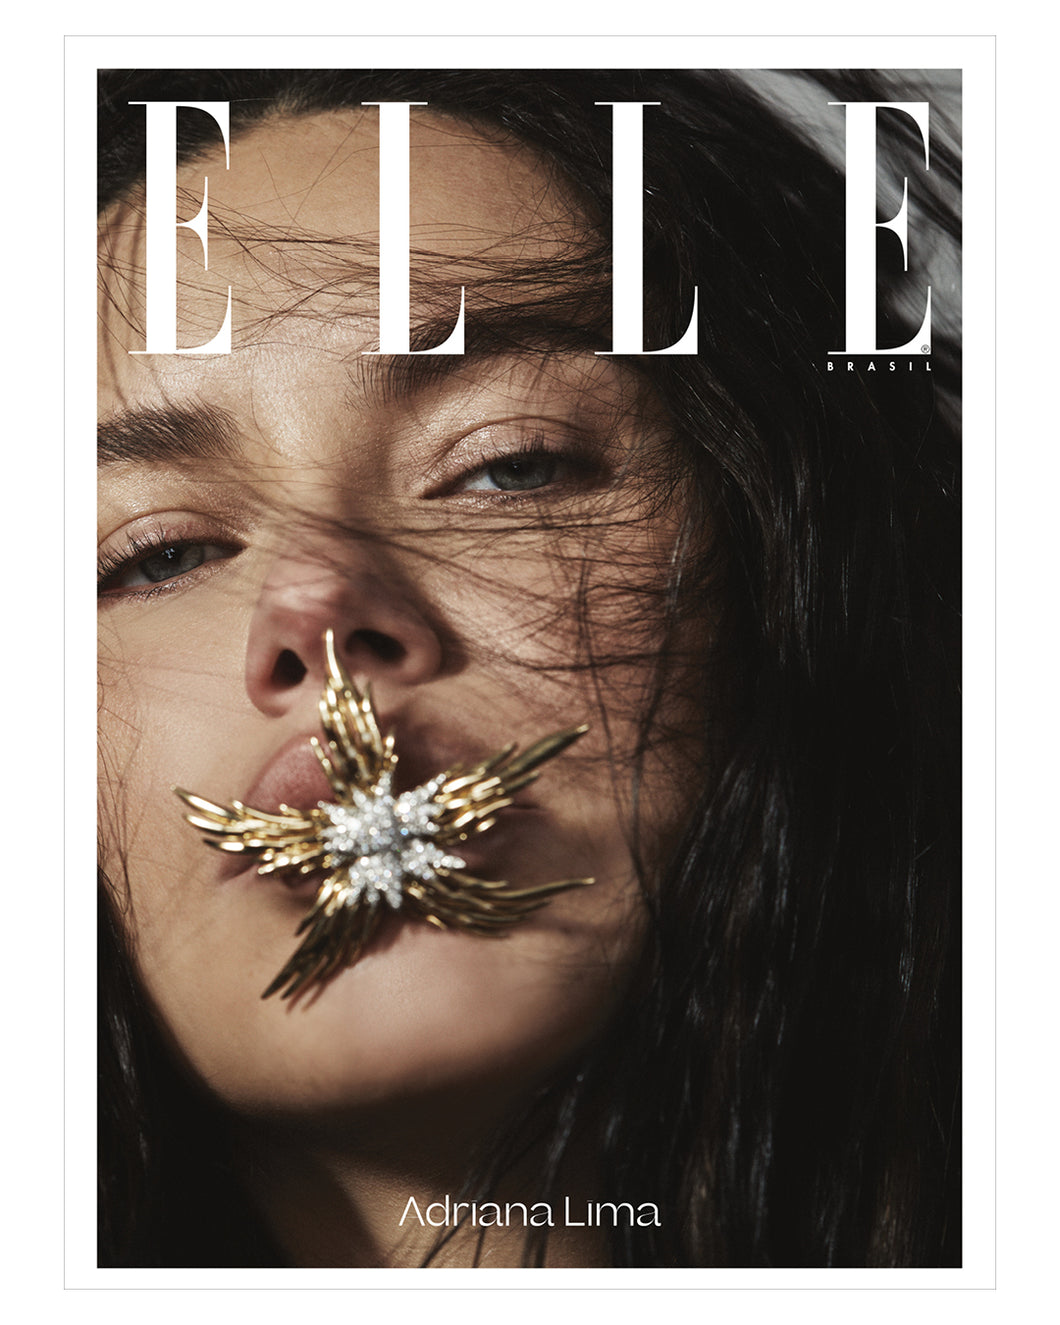 Revista Elle Brasil Nº 4 - Abr/2008 - New Chic / Acessórios